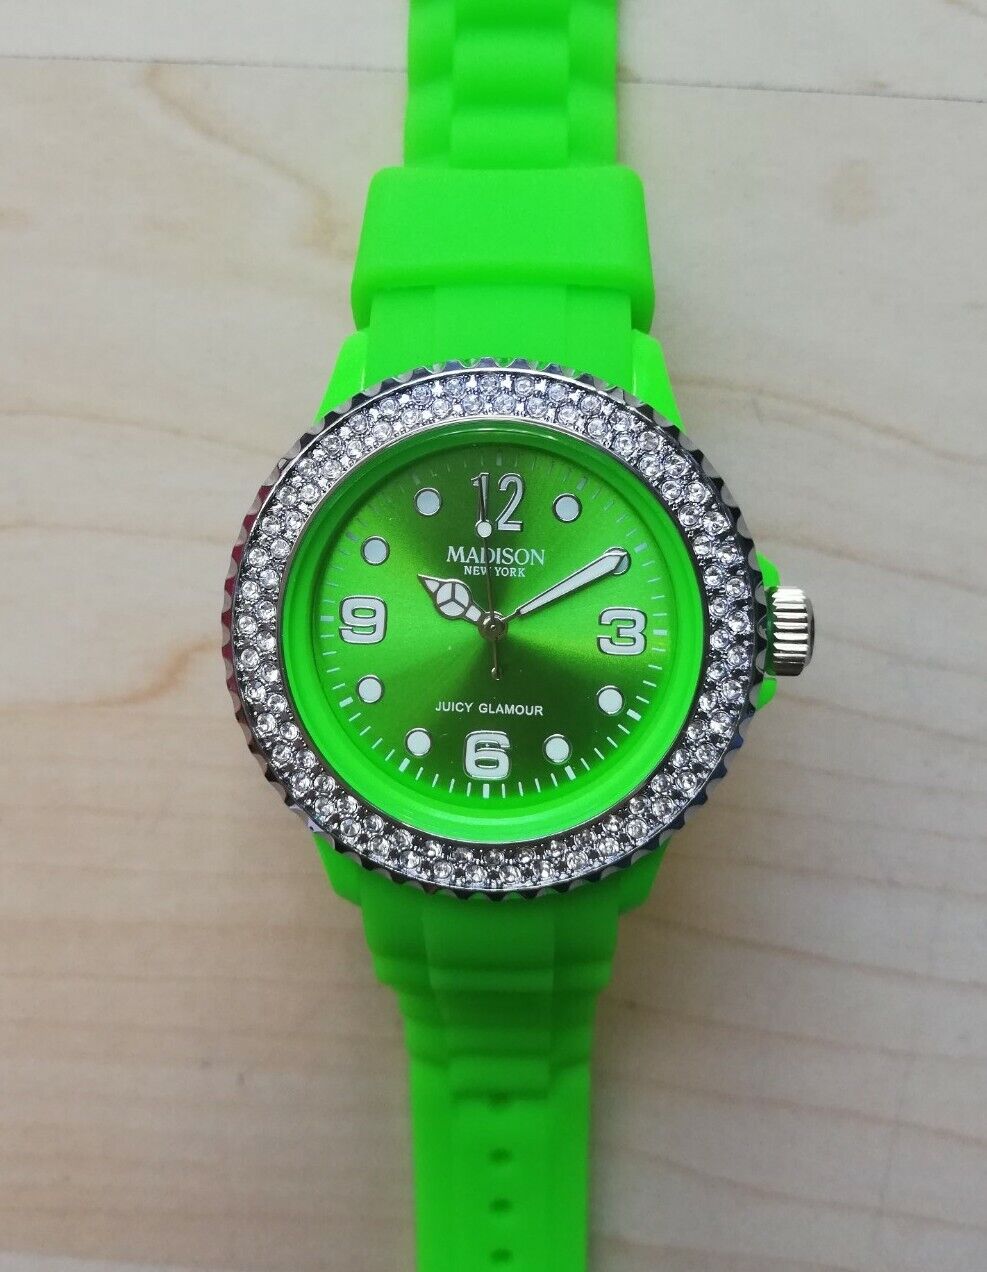 NEW Green Madison New York Juicy Glamour Watch with Swarovski Elements Watch